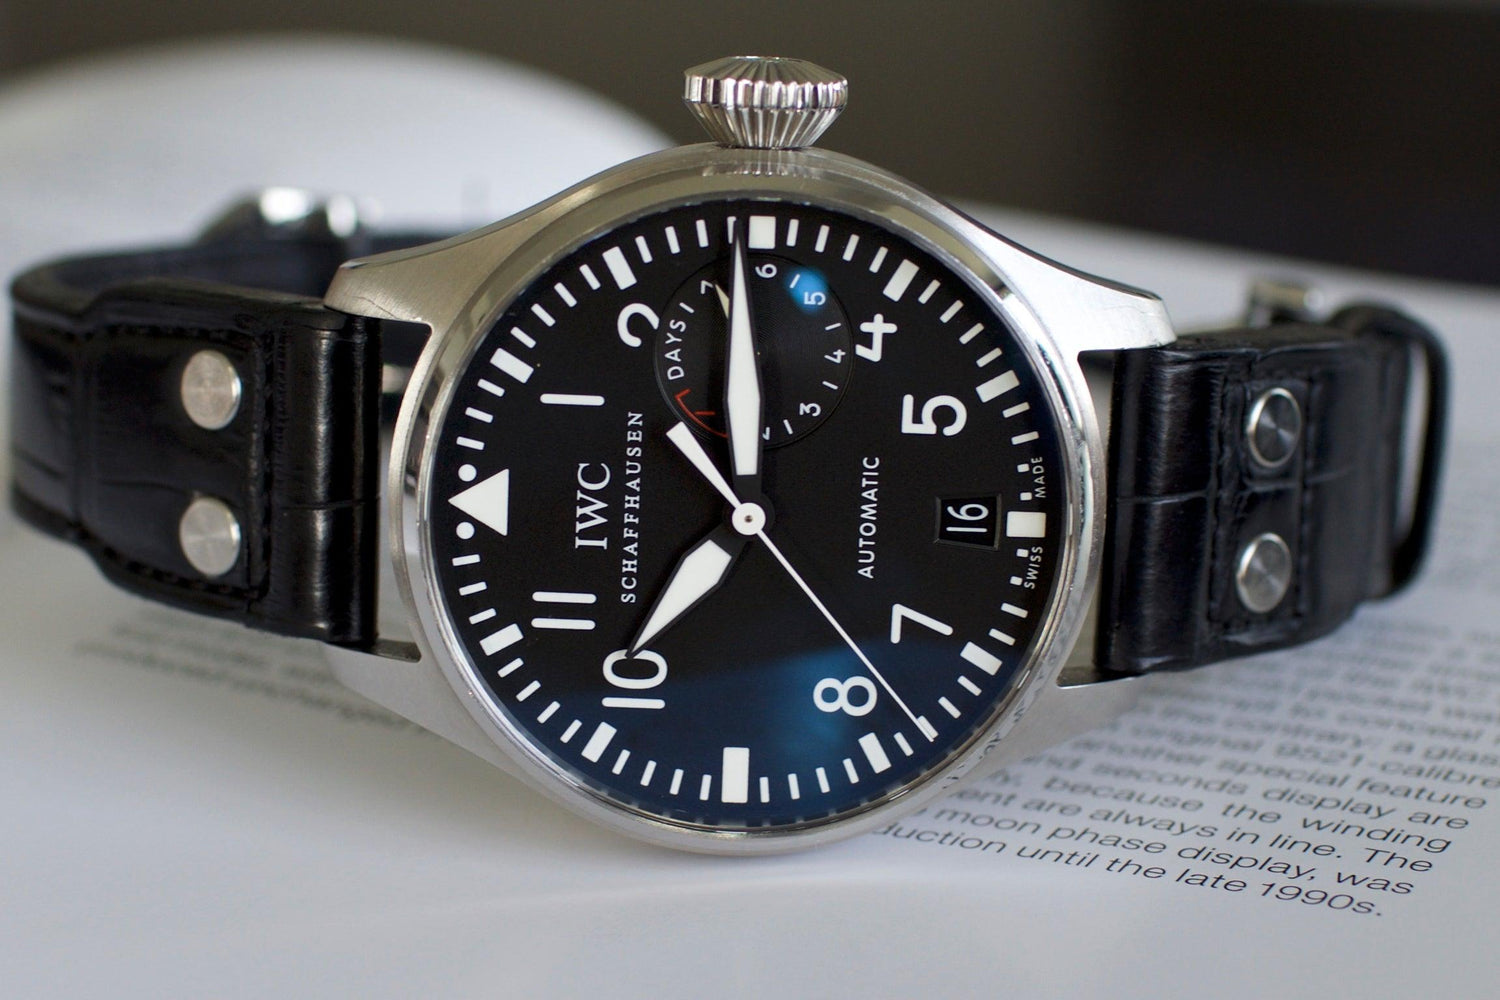 SOLDOUT: IWC Big Pilot 5004 - WearingTime Luxury Watches